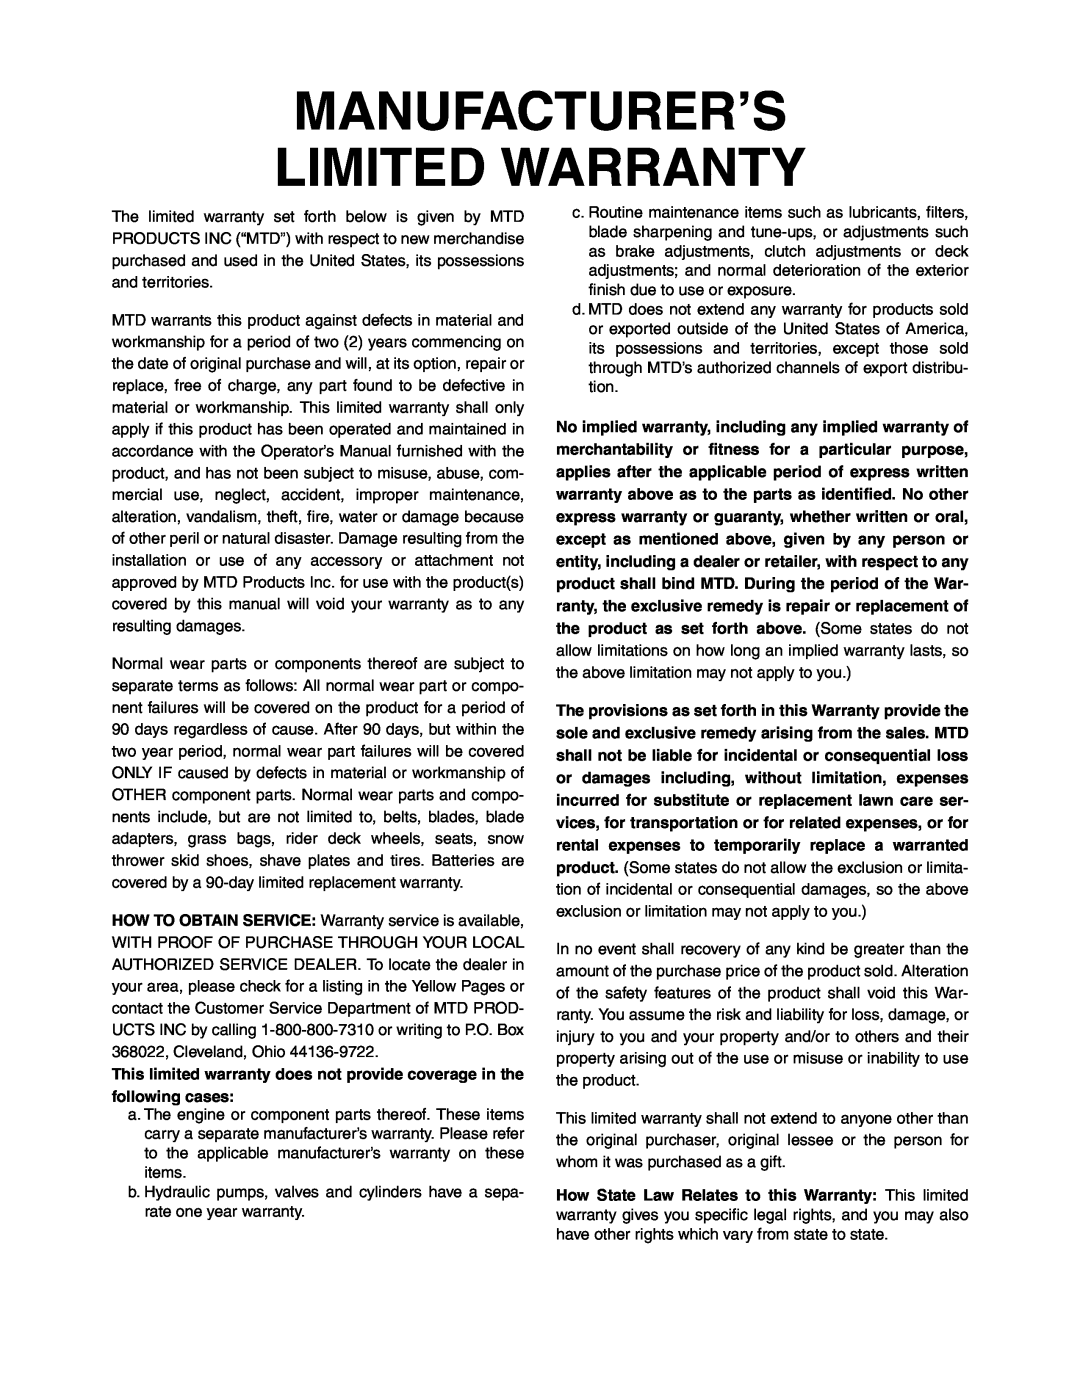 MTD 640 manual Manufacturer’S Limited Warranty 